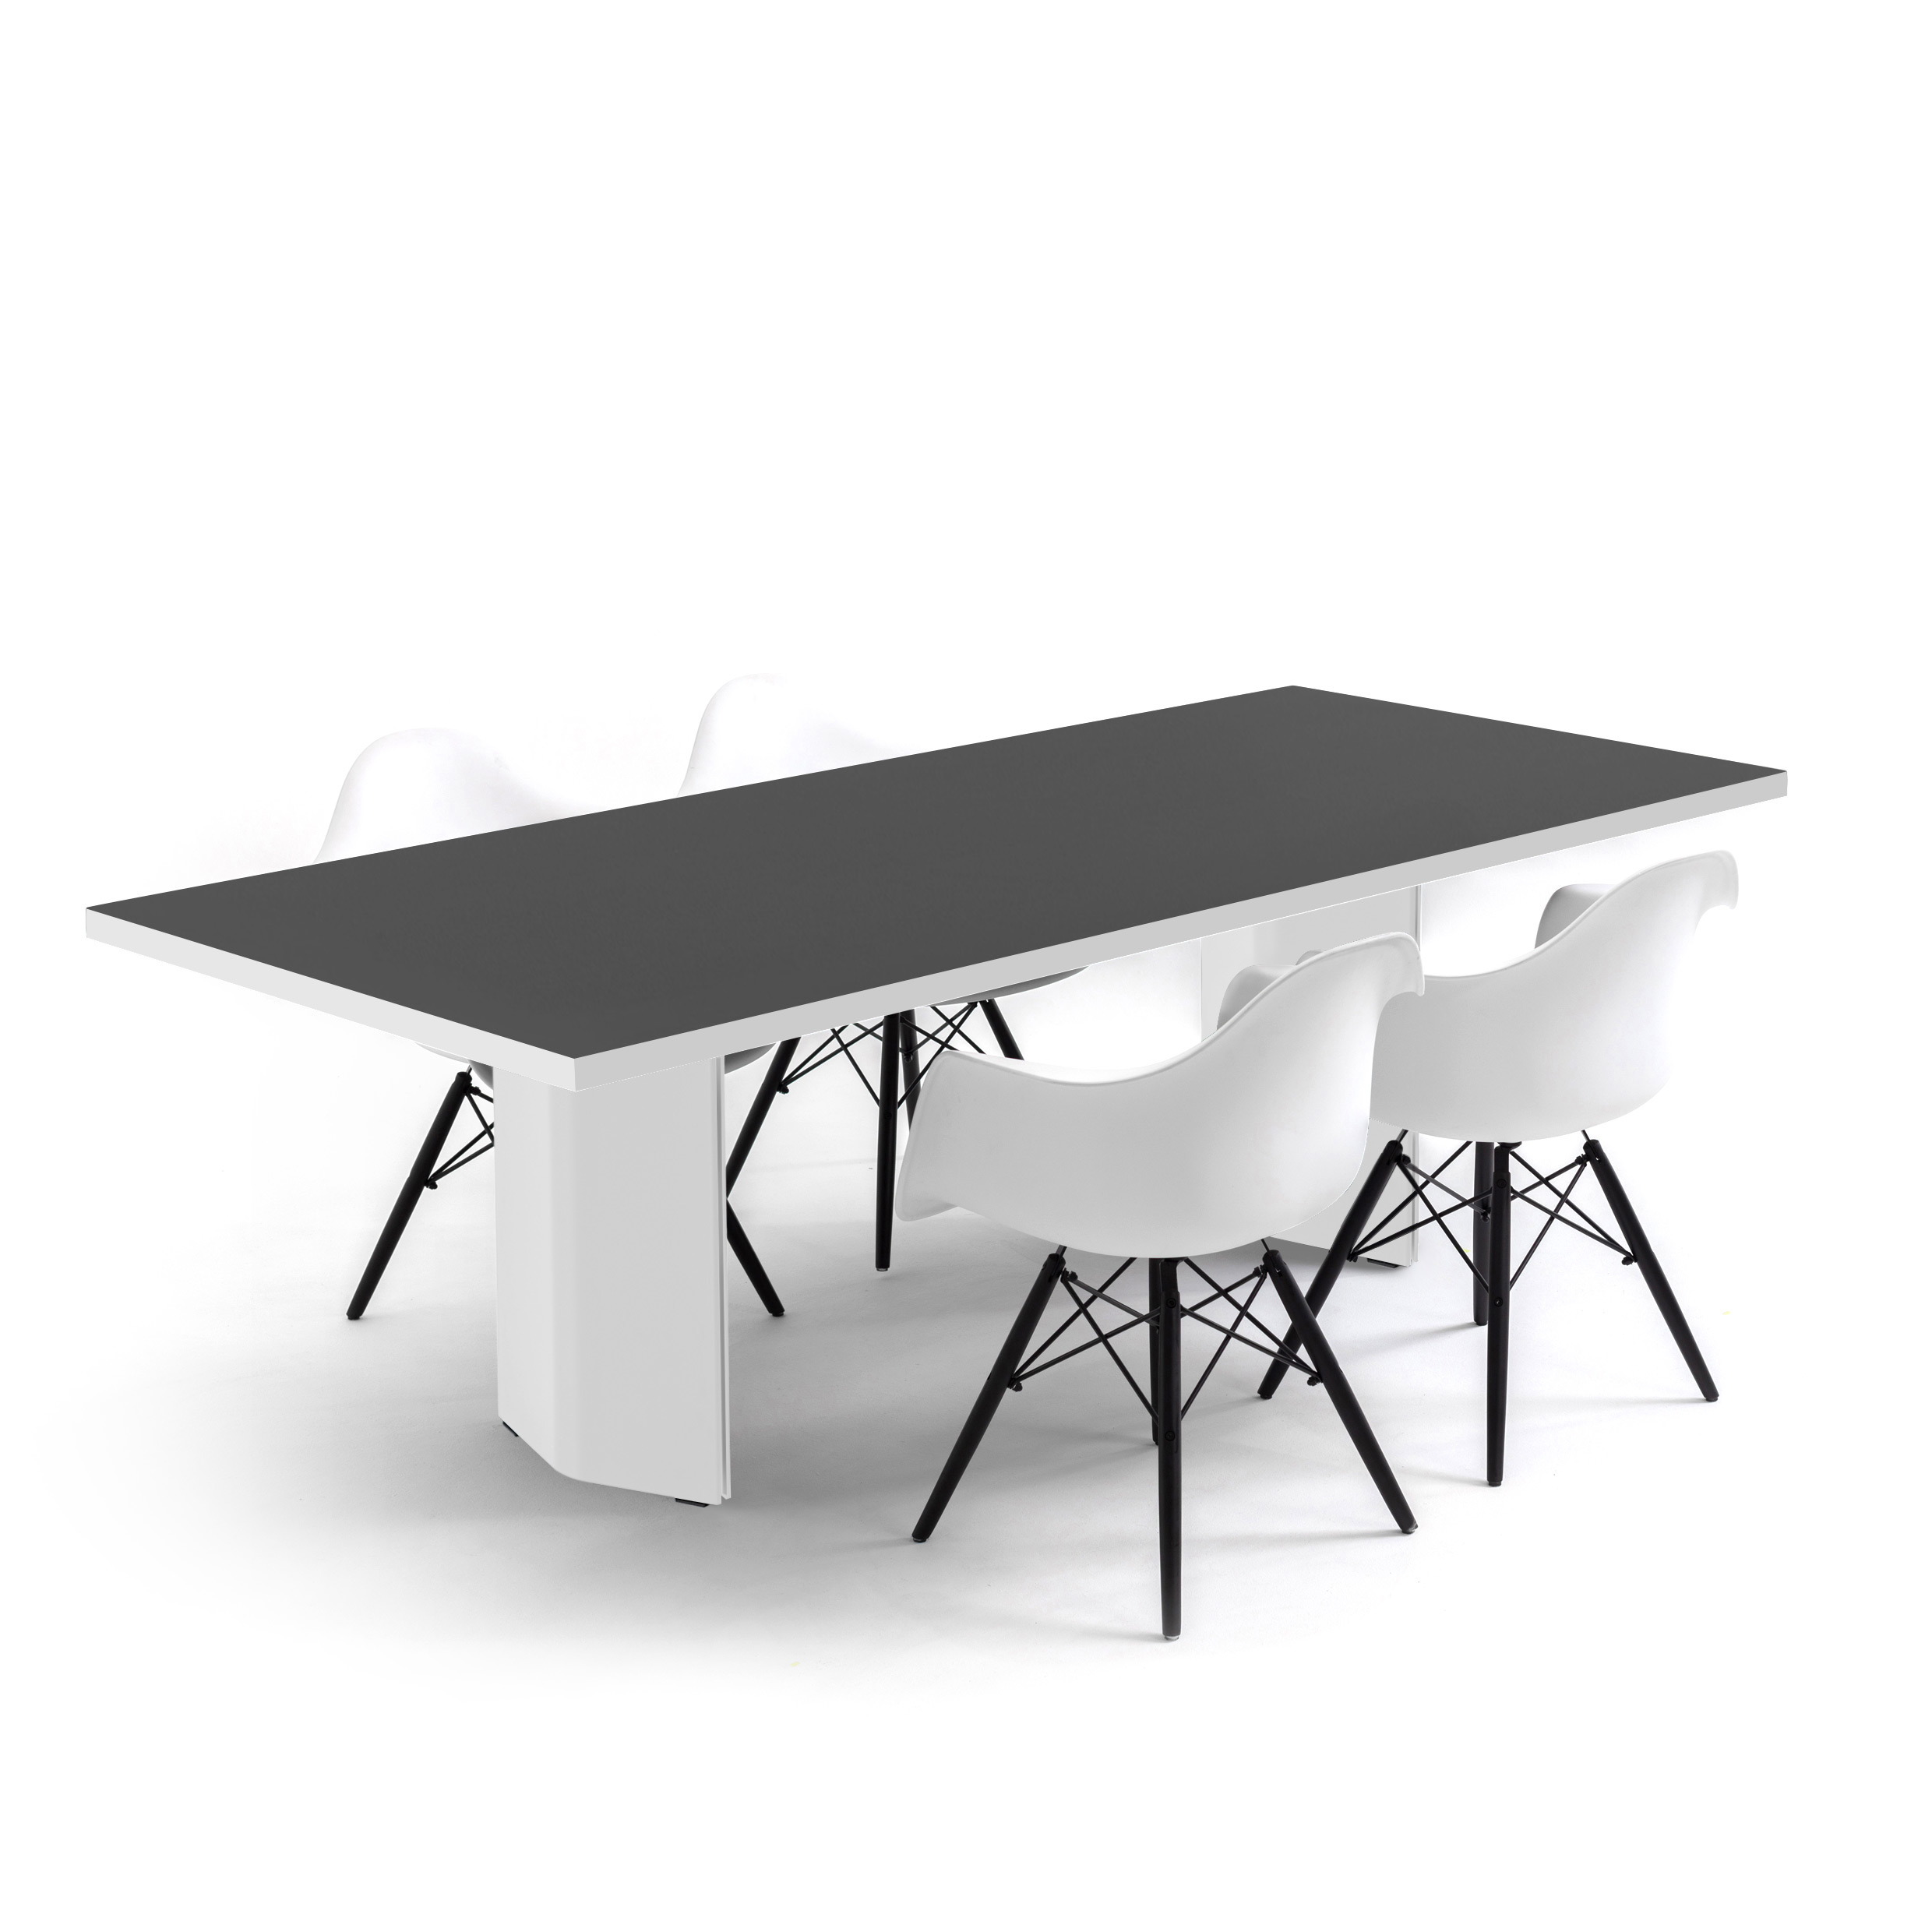 FORM EXCLUSIVE // KUNO - TABLE | FENIX | BLACK - DOUBLE WHITE - WHITE - 240CM X 100CM X 4CM